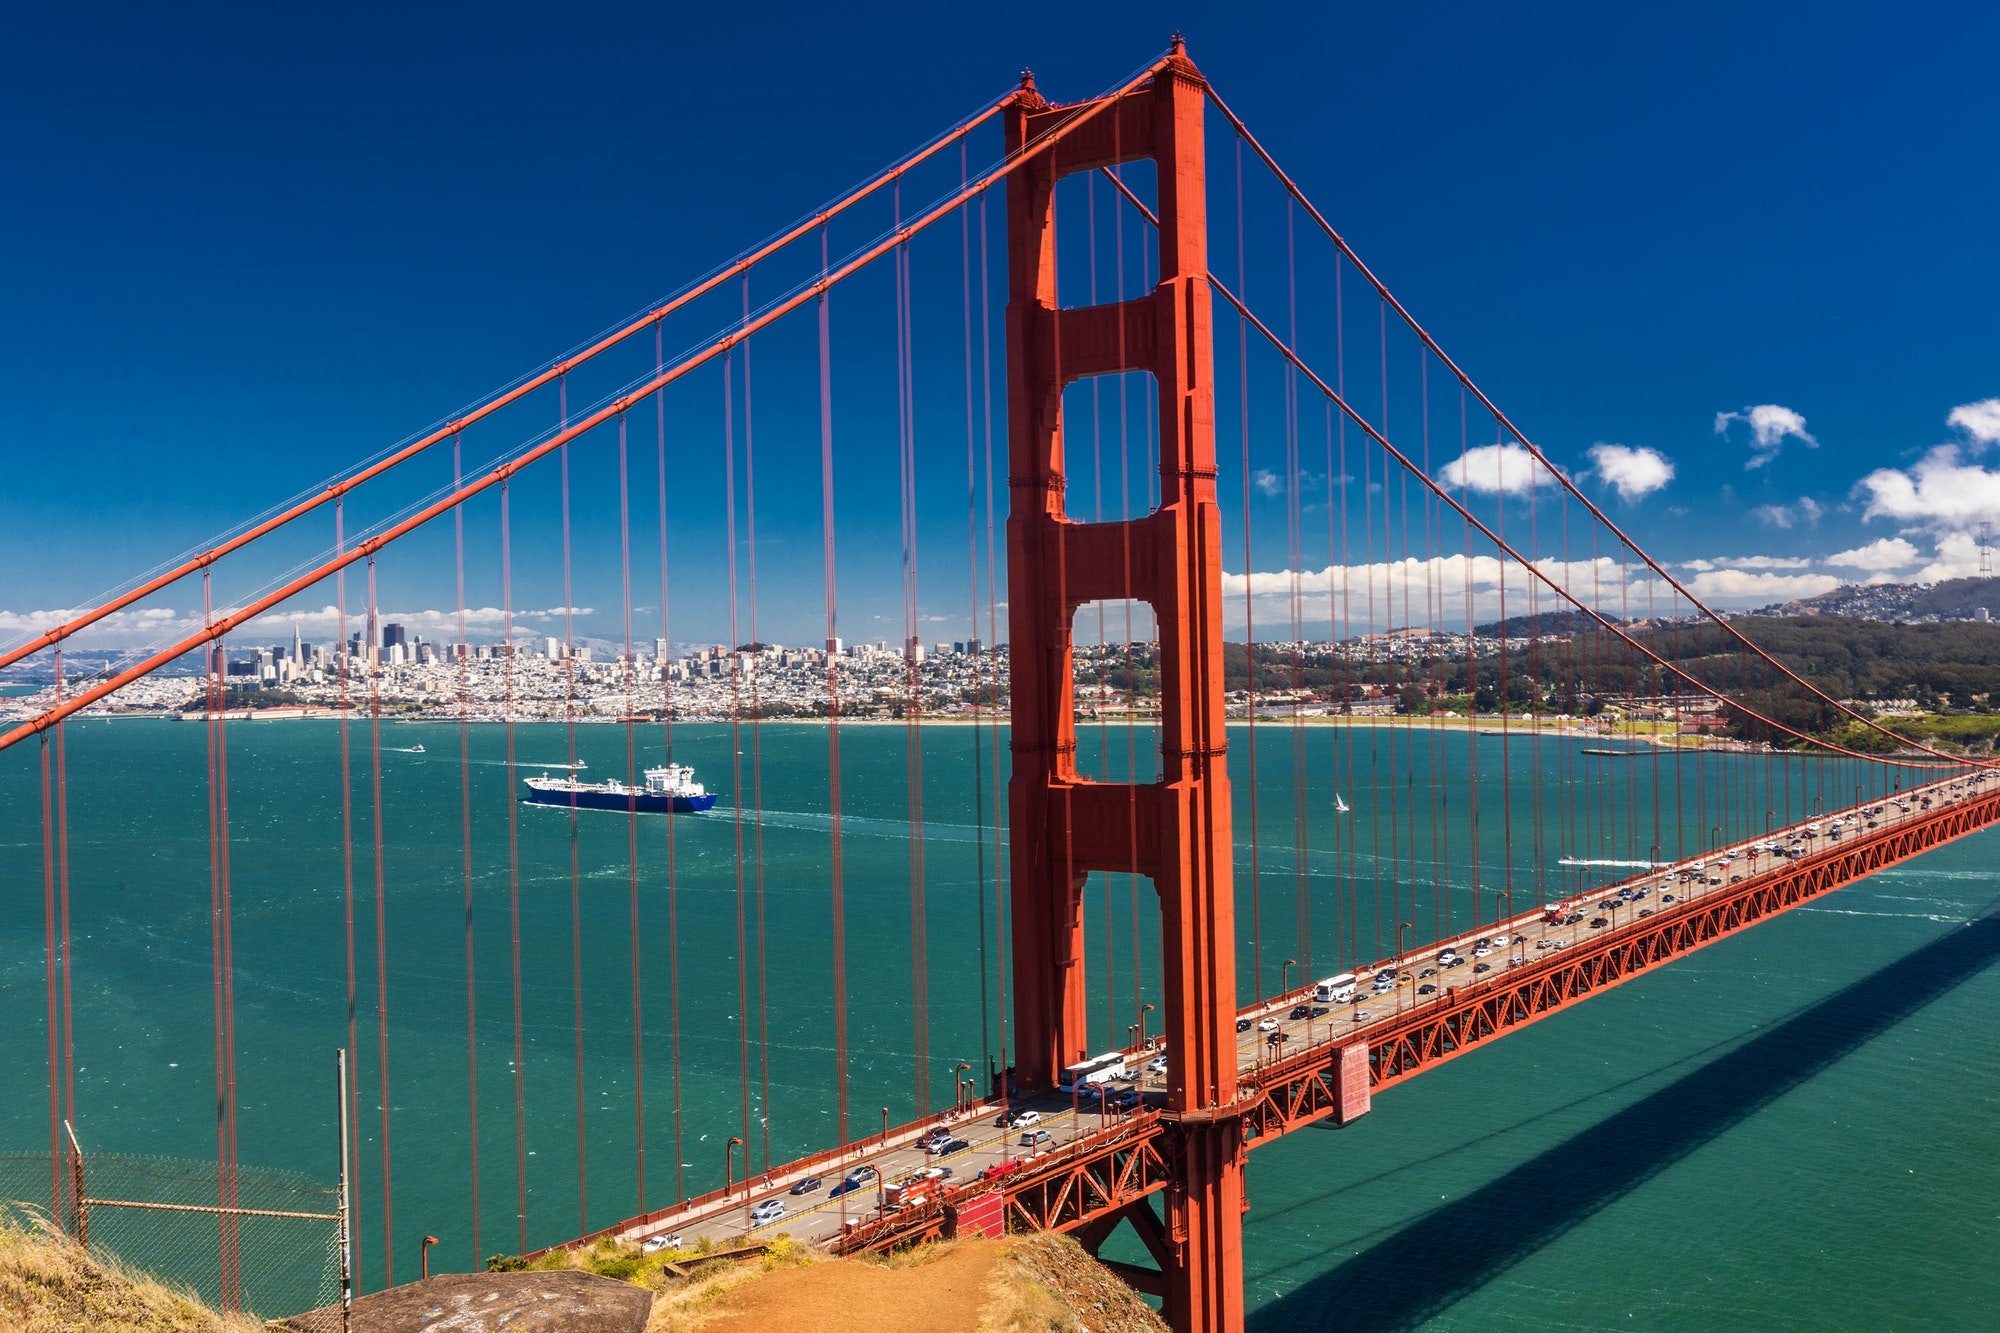 Day time shot of Golden Gate Bridge in San Francisco, California